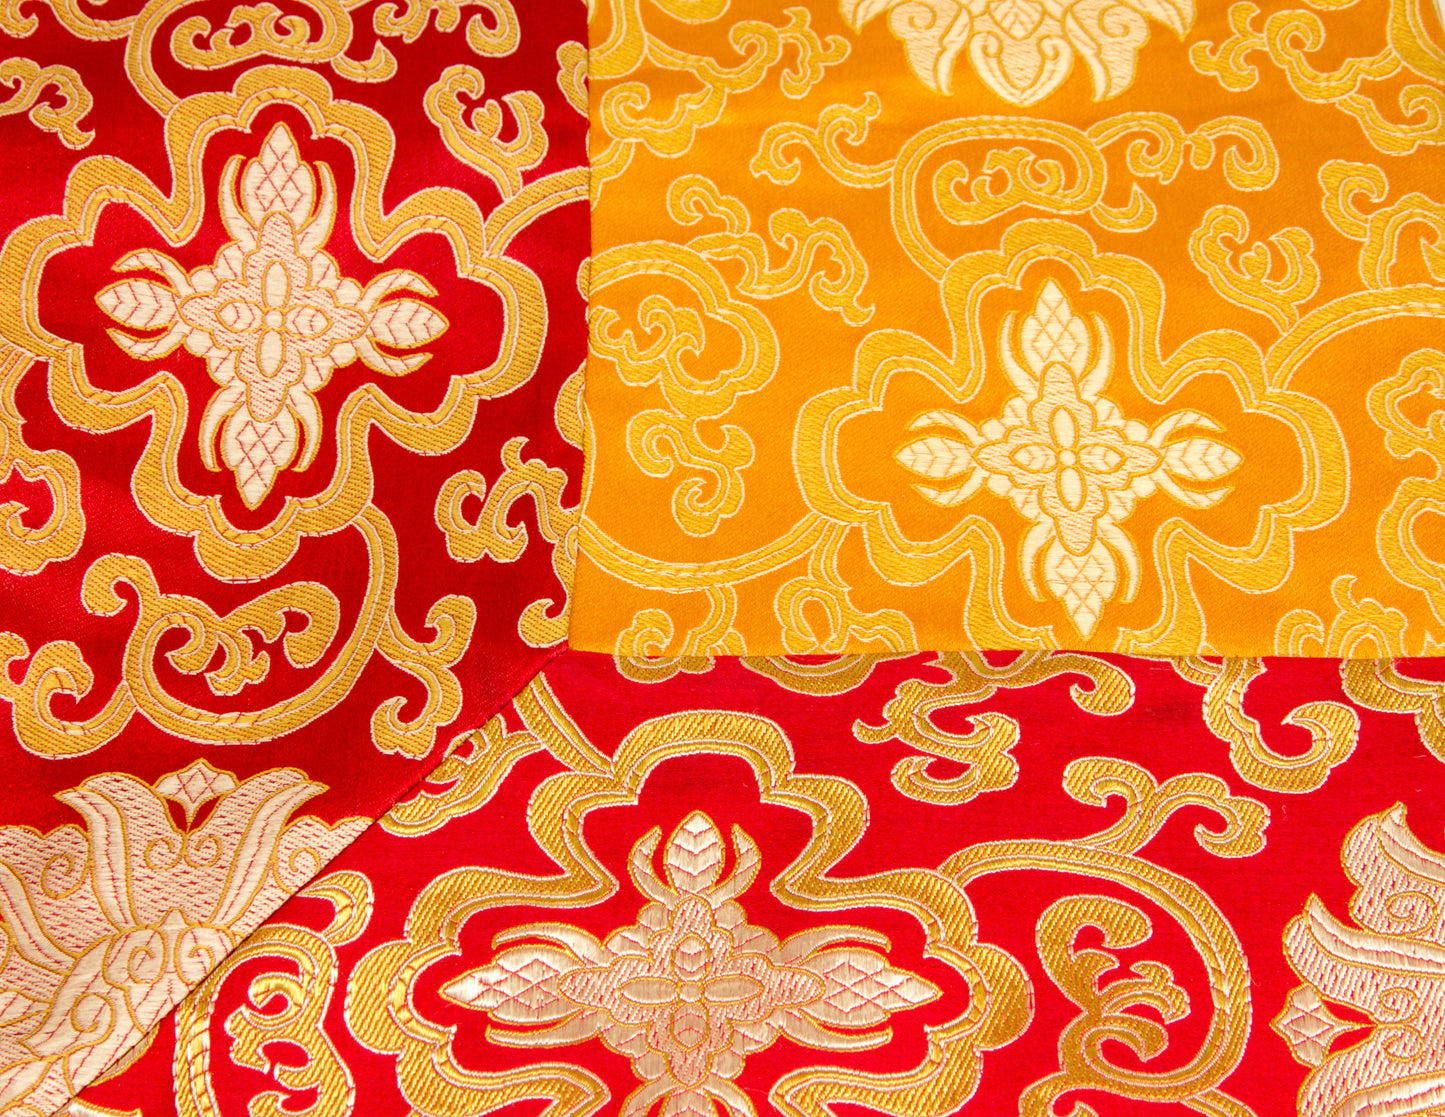 Medium Brocade Cloth / Practice Table Cover – Red & Orange